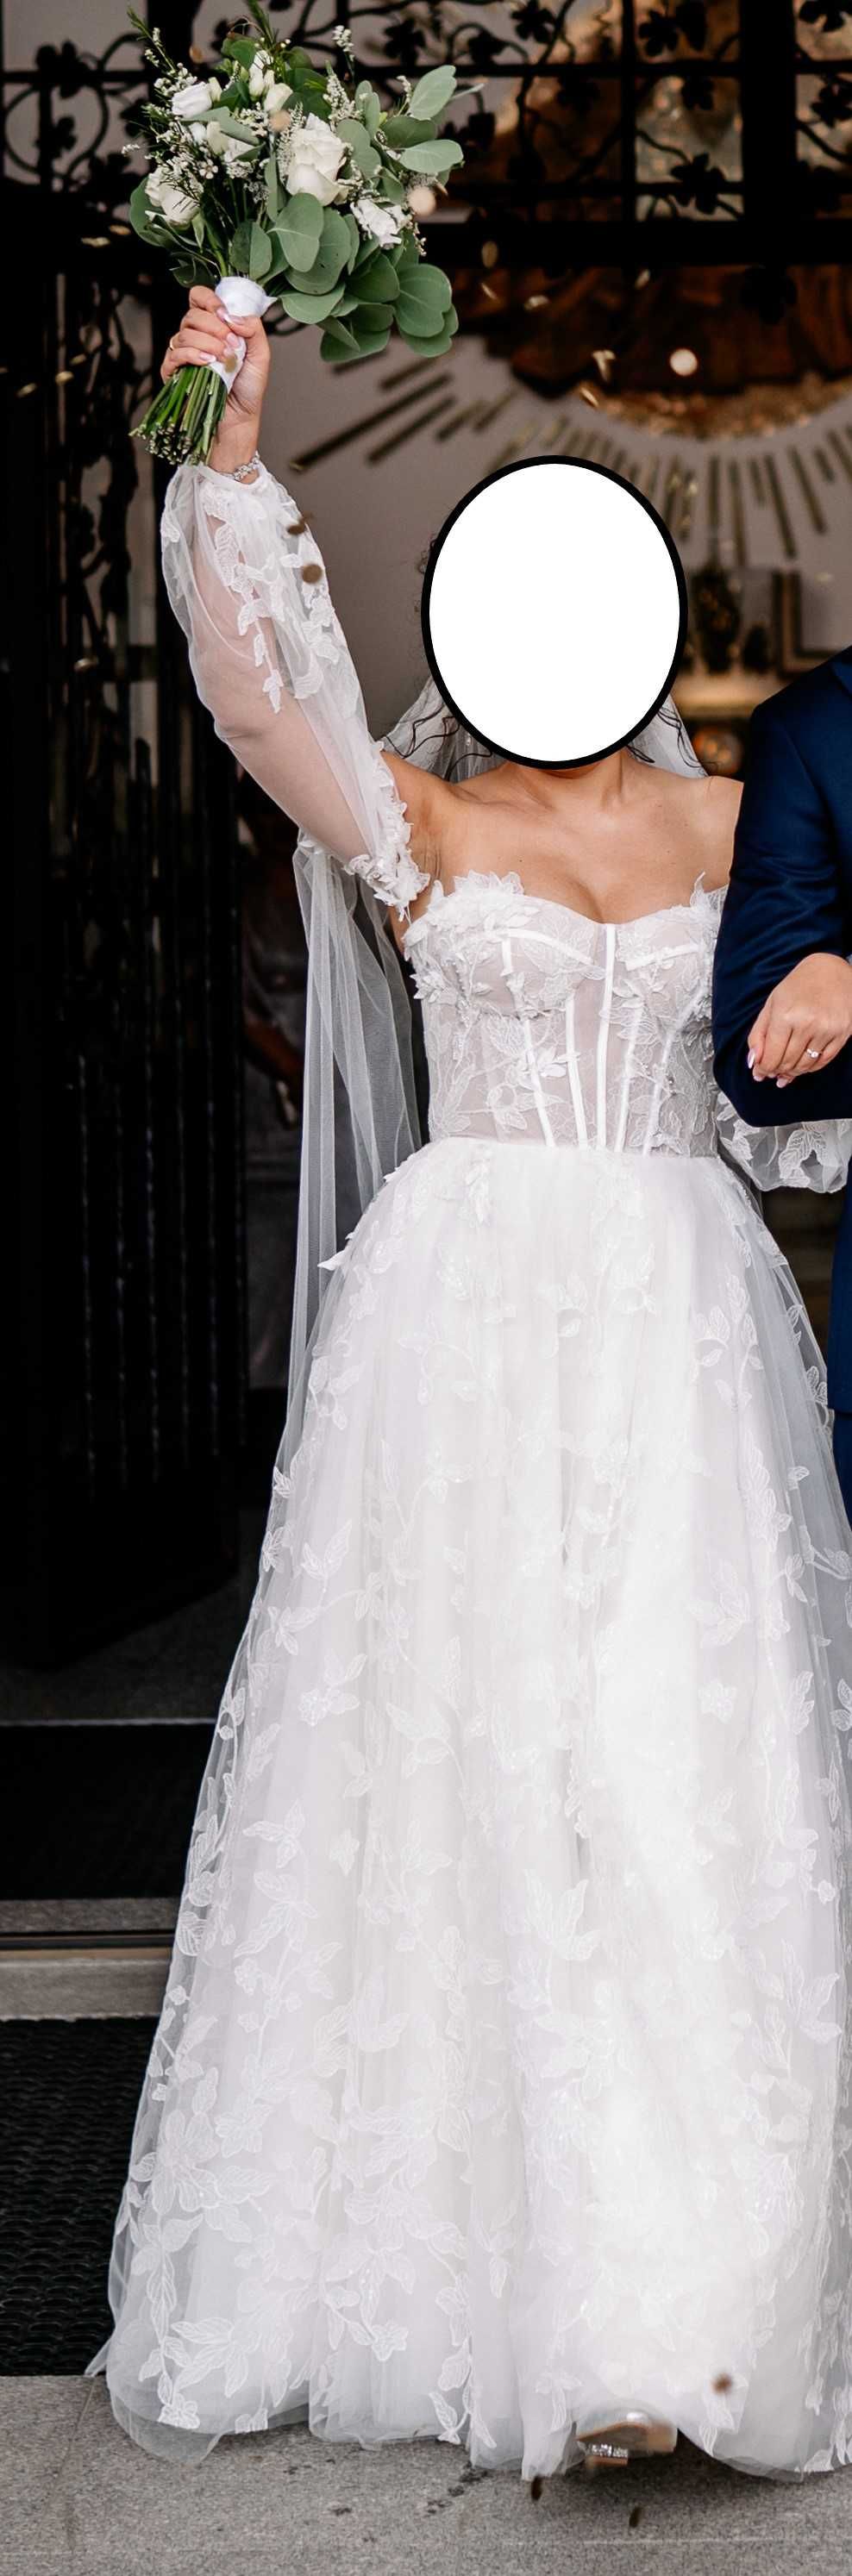 Piękna suknia ślubna z dopinanymi rękawkami